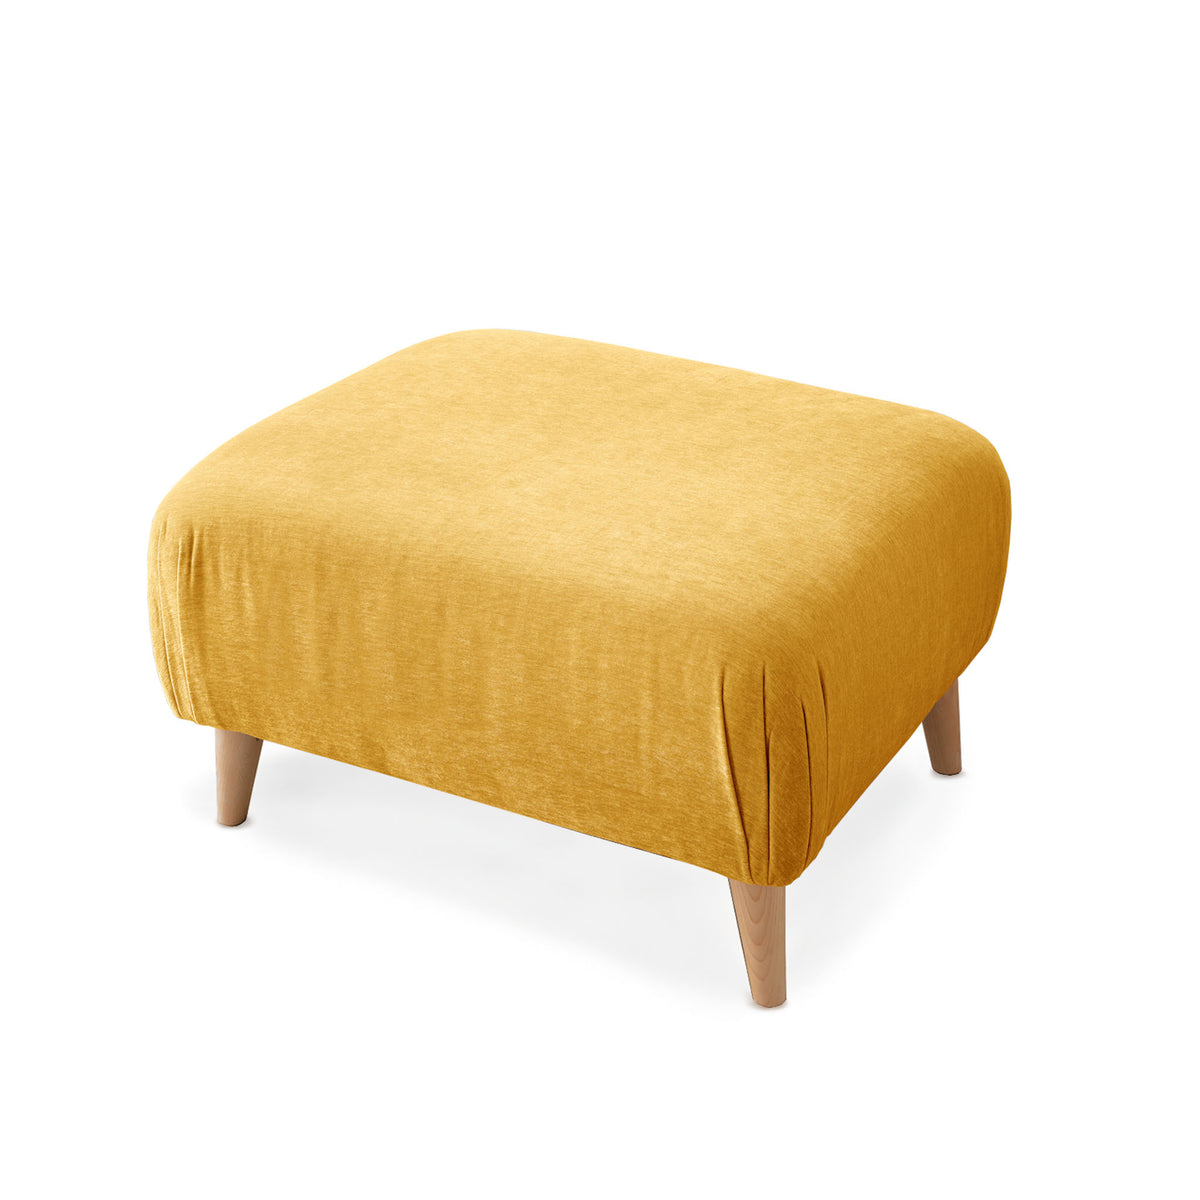 Rowen gold footstool